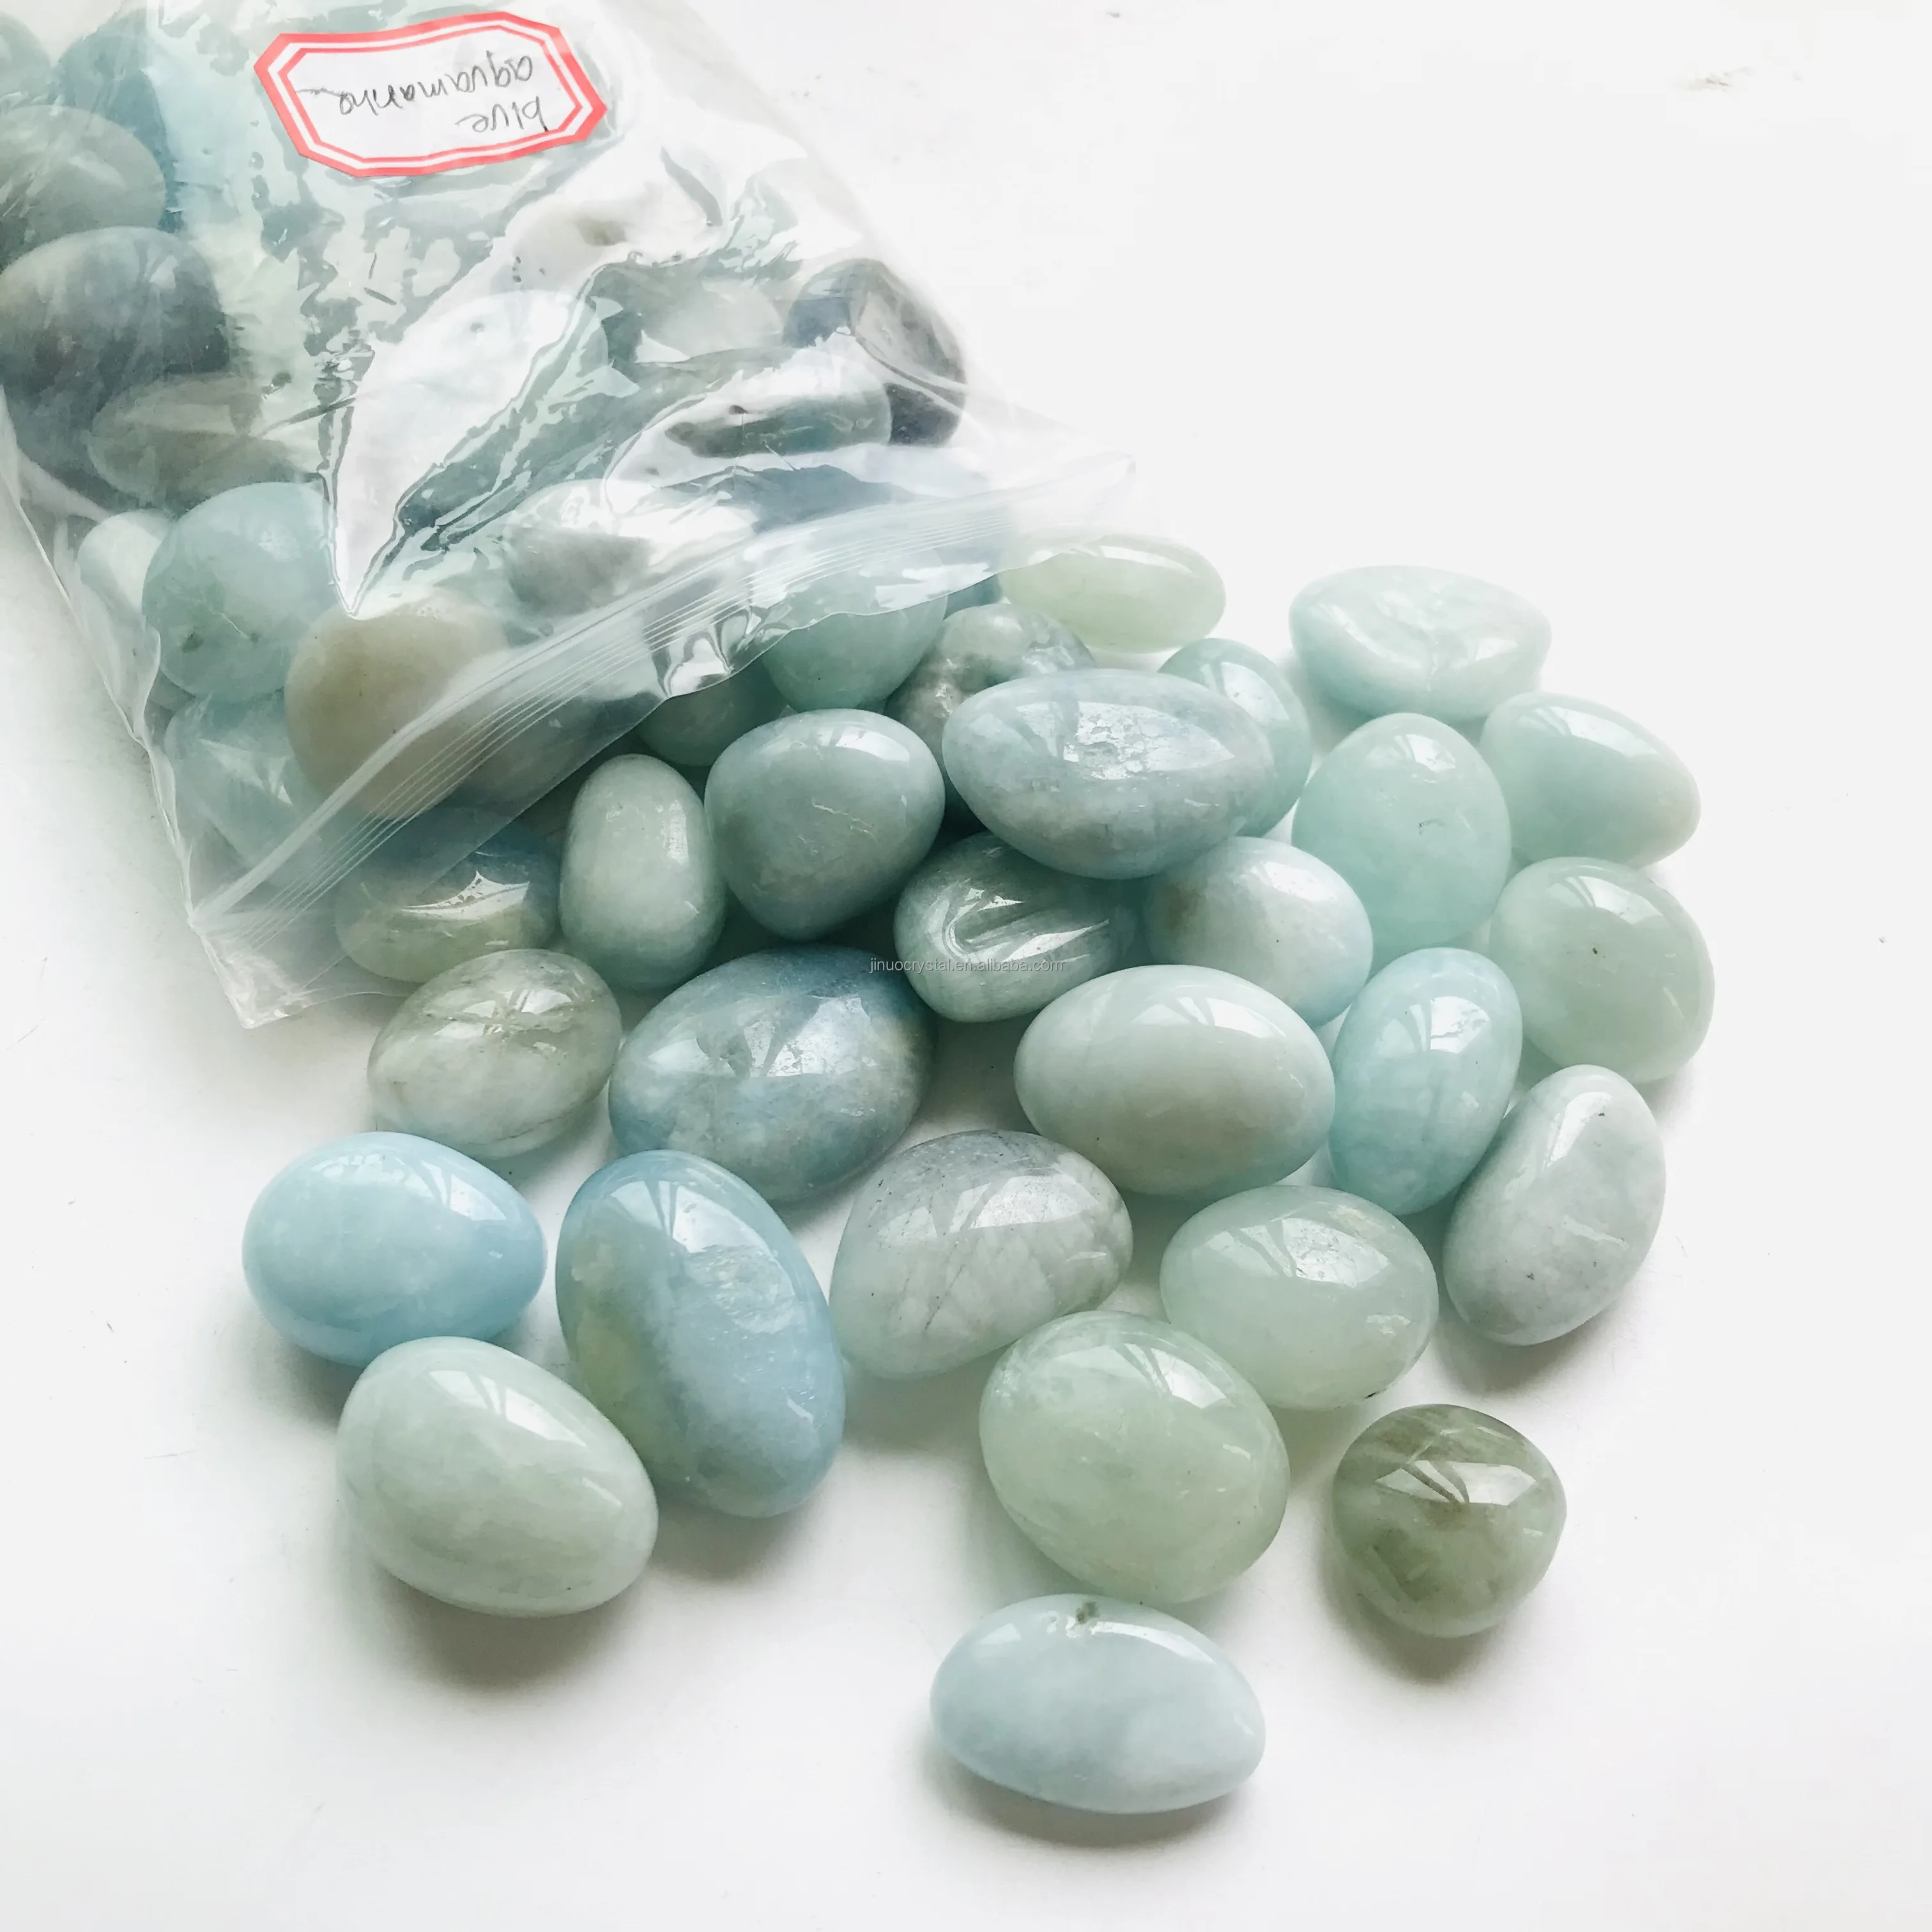 

Hot sale crystal gravel stone natural aquamarine tumbled stones for healing